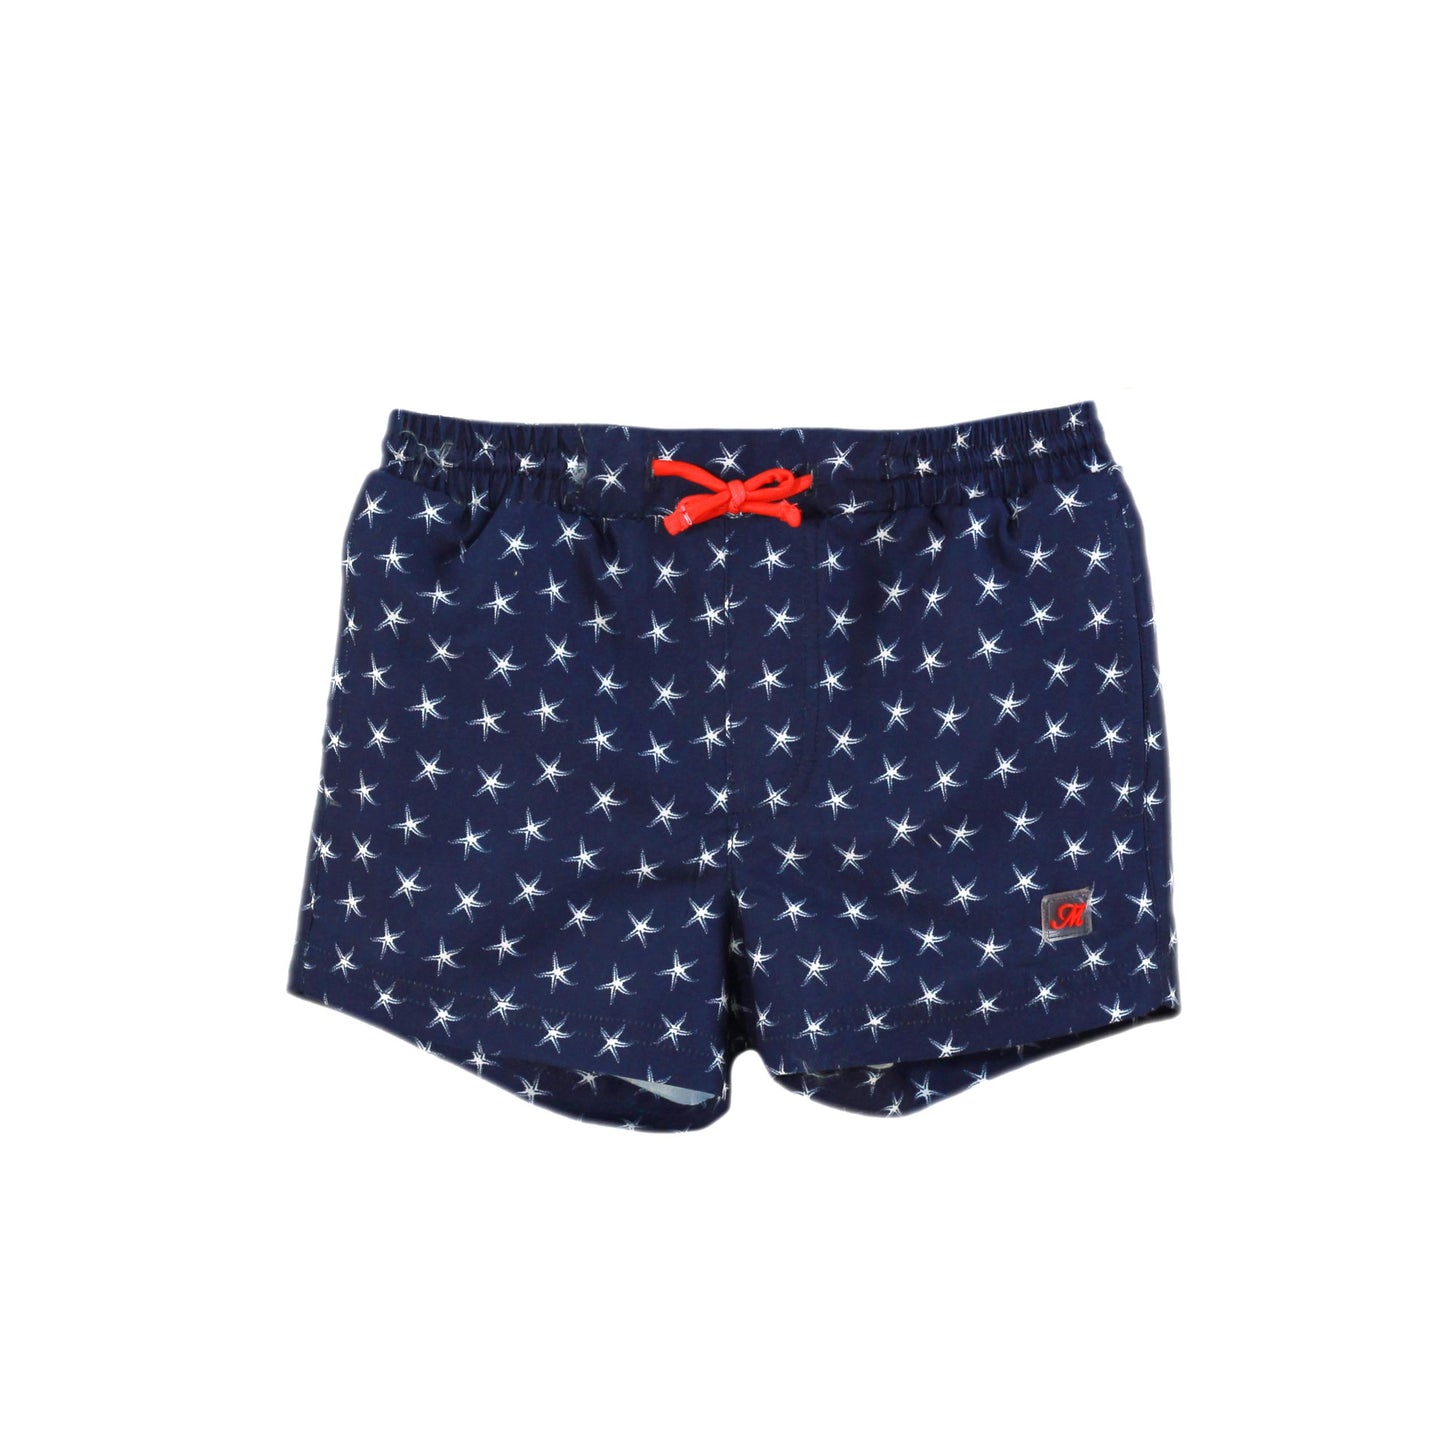 MIRANDA Navy & Red Nautical Print Boys Swimming Shorts - 414B